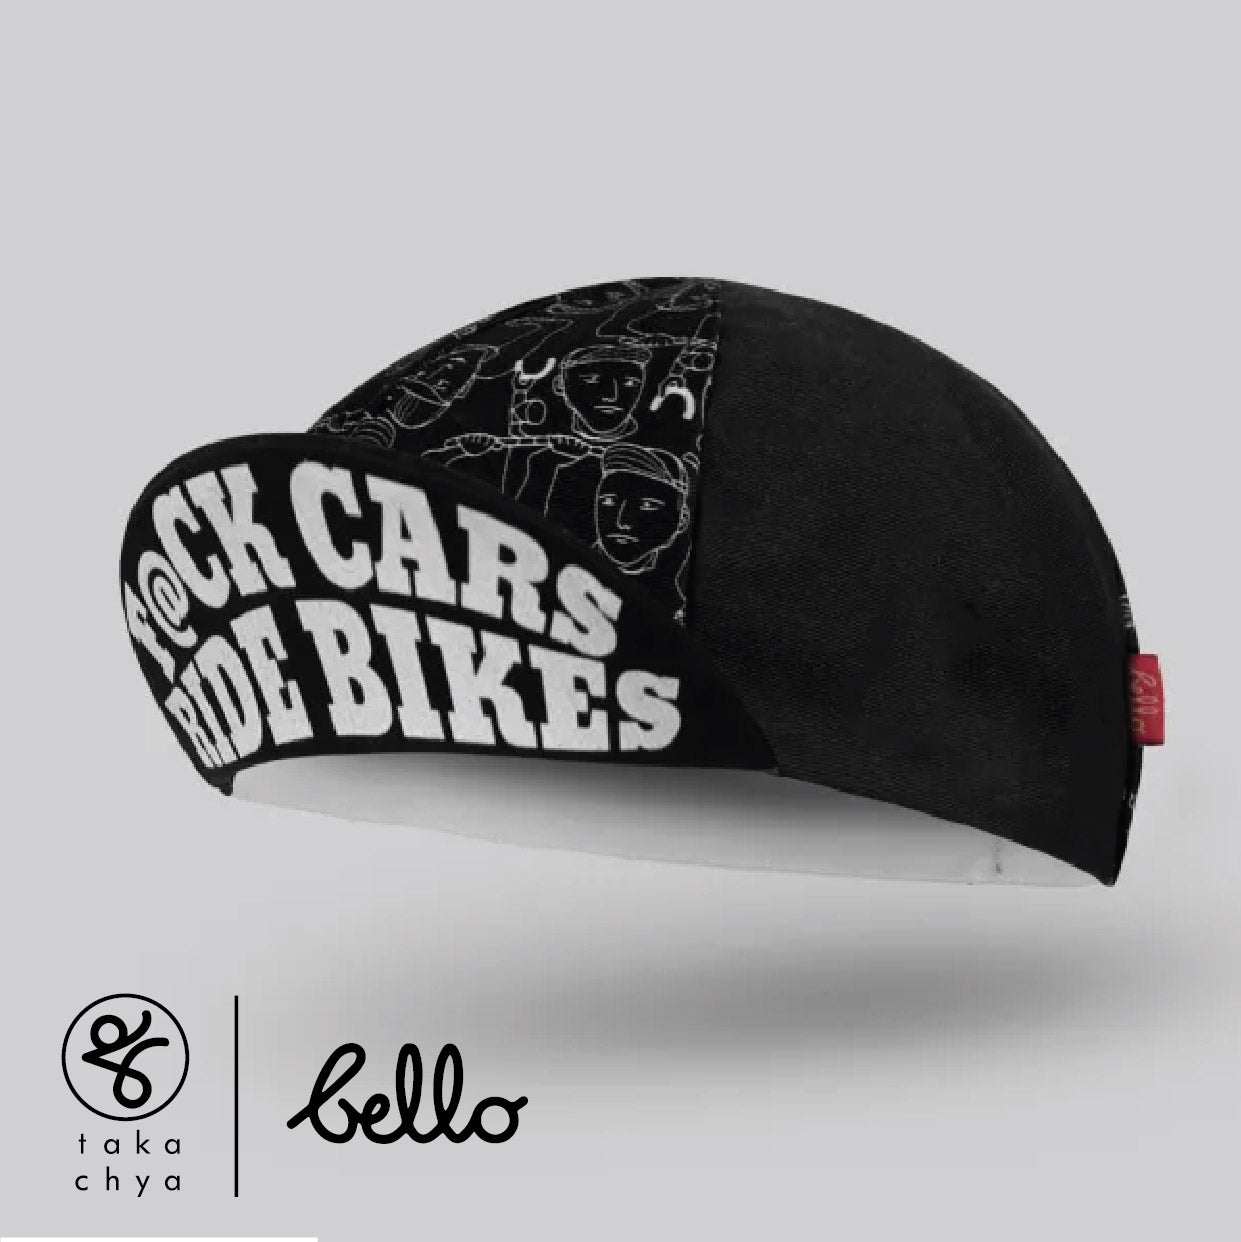 F@ck Cars Ride Bikes - Bello Cyclist Designer Collaboration Cycling Cap